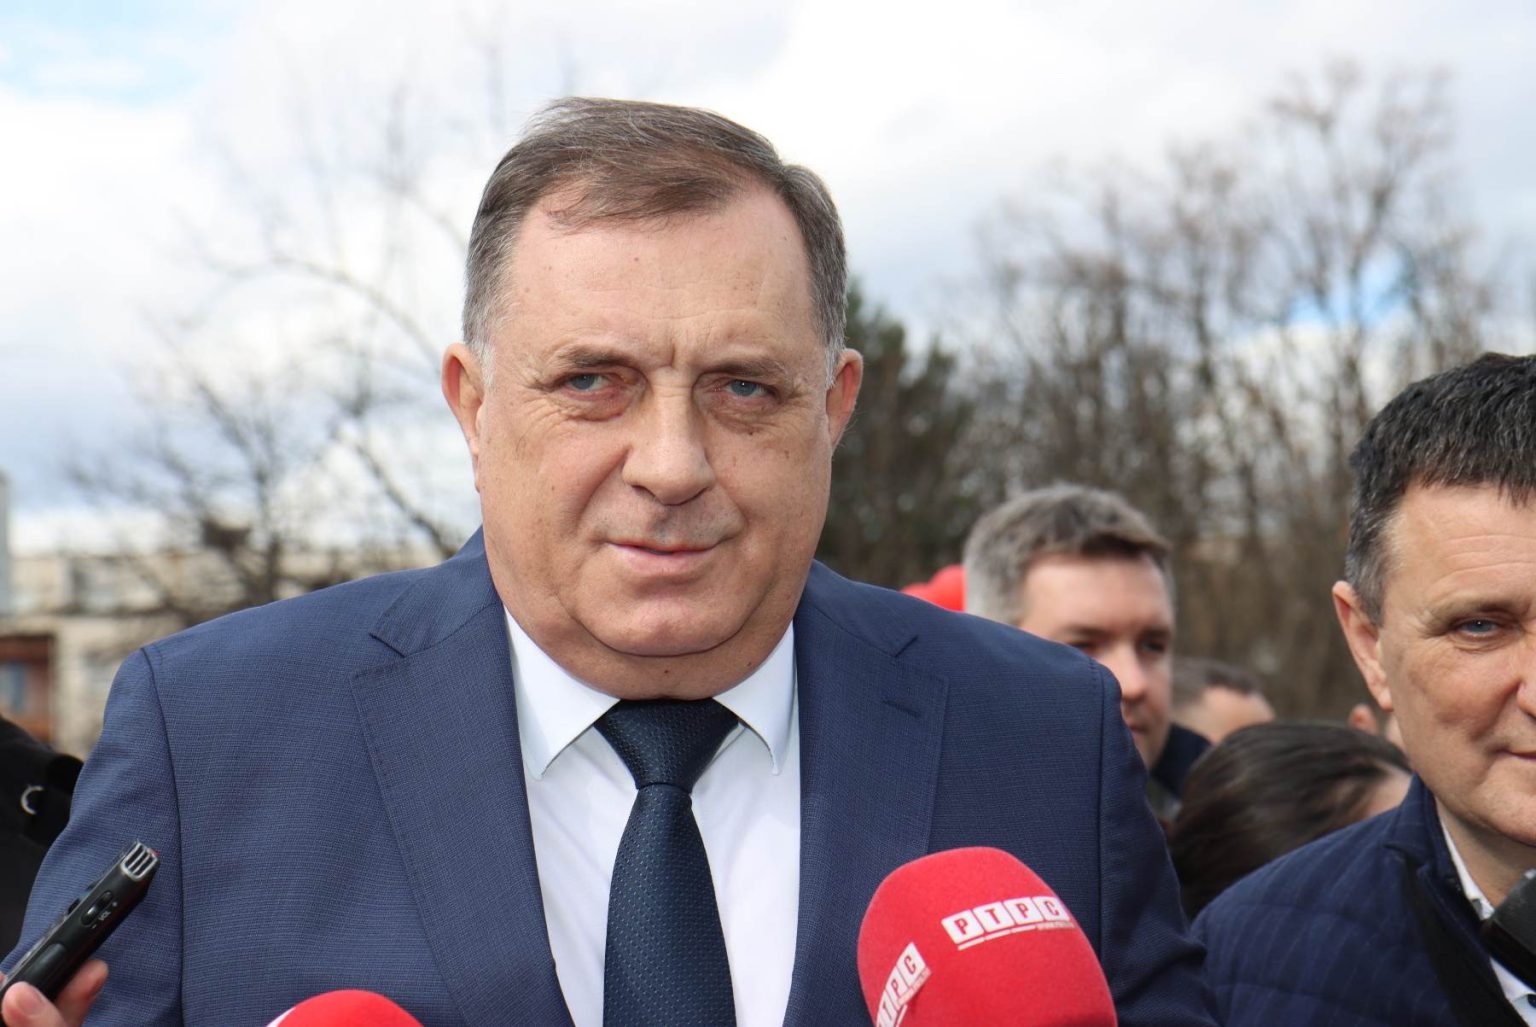 Dodik Moves To Protect Republika Srpska From Soros Interference